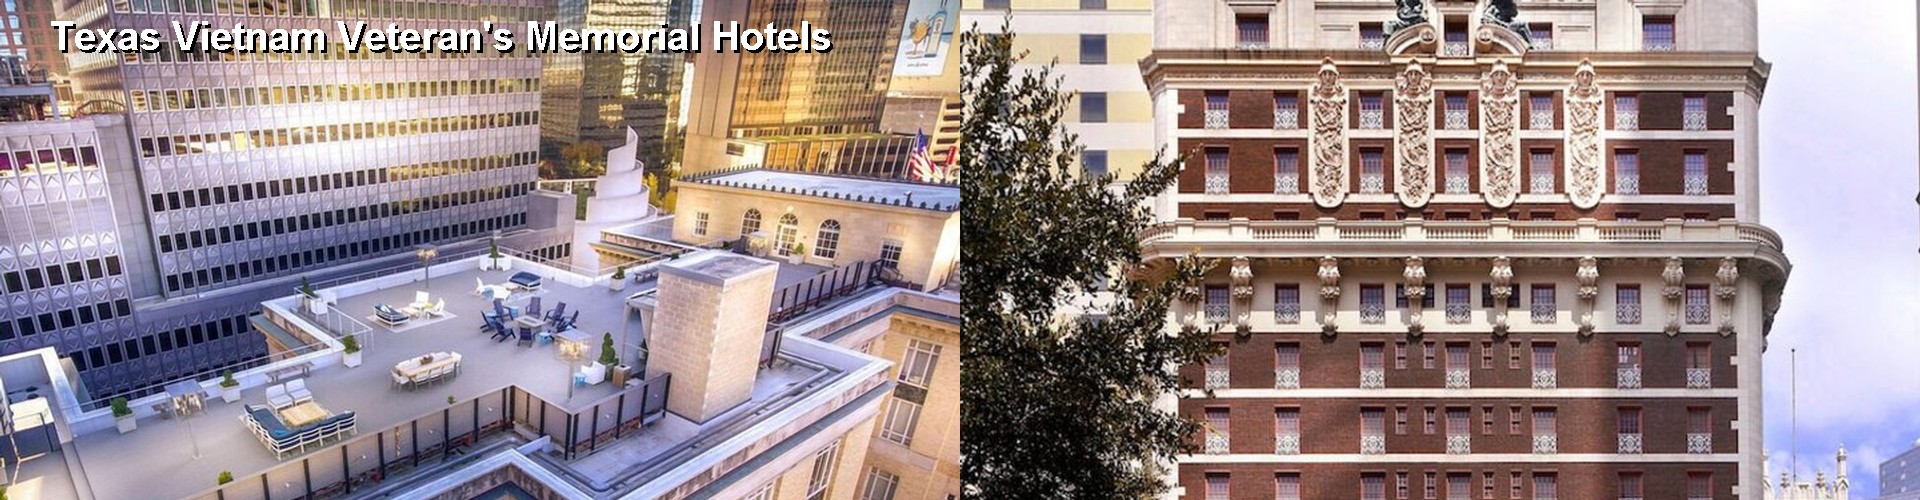 3 Best Hotels near Texas Vietnam Veteran's Memorial